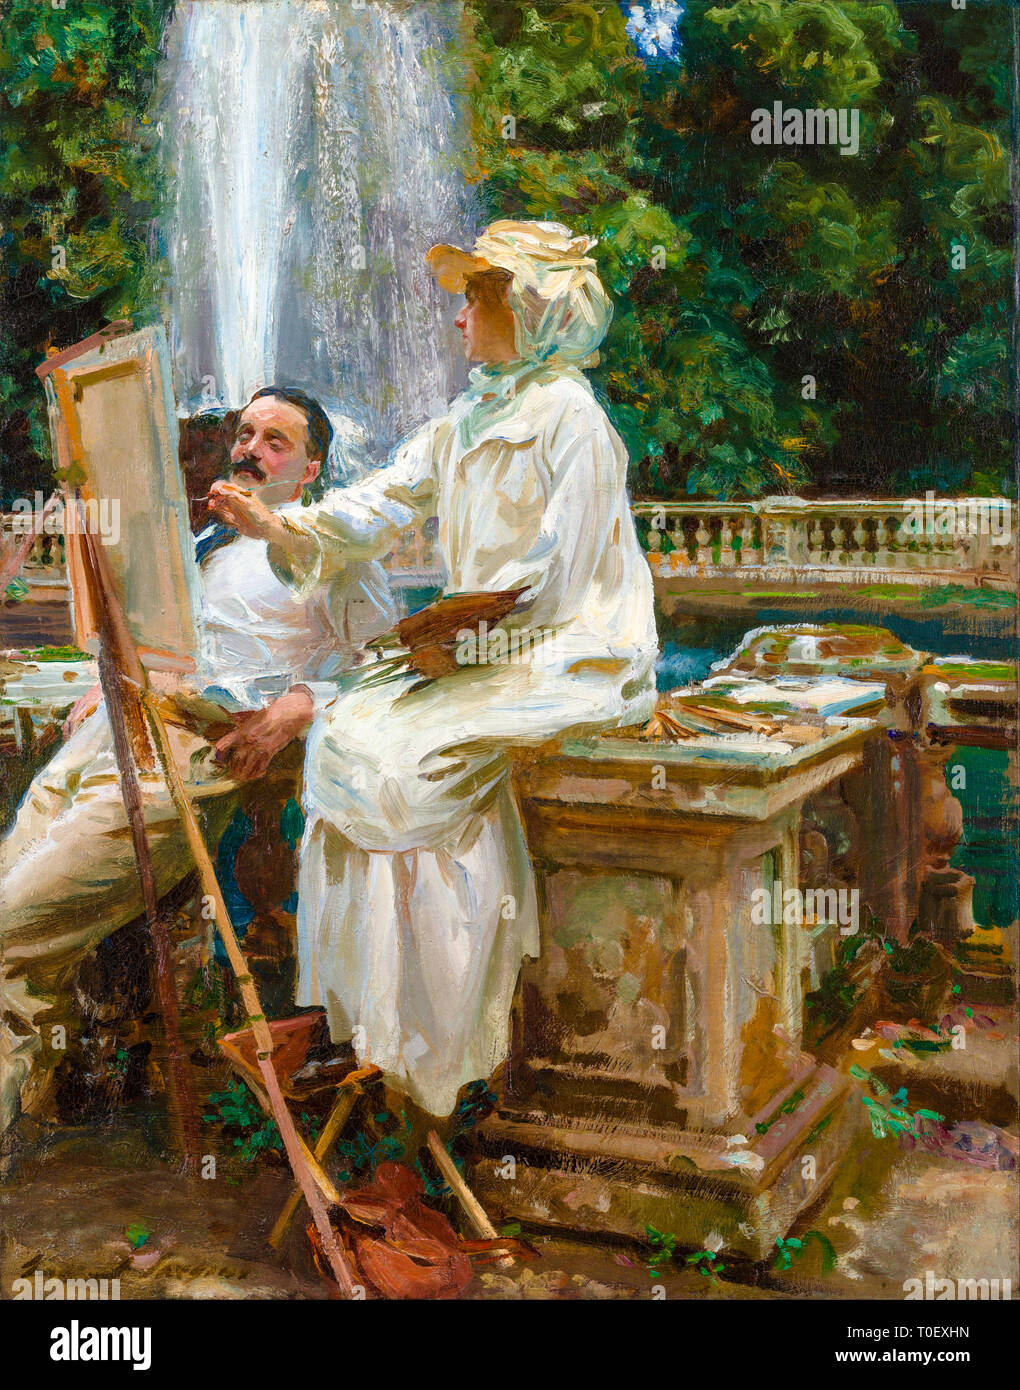 John Singer Sargent, La Fontaine, Villa Torlonia, Frascati, Italie, peinture, 1907 Banque D'Images